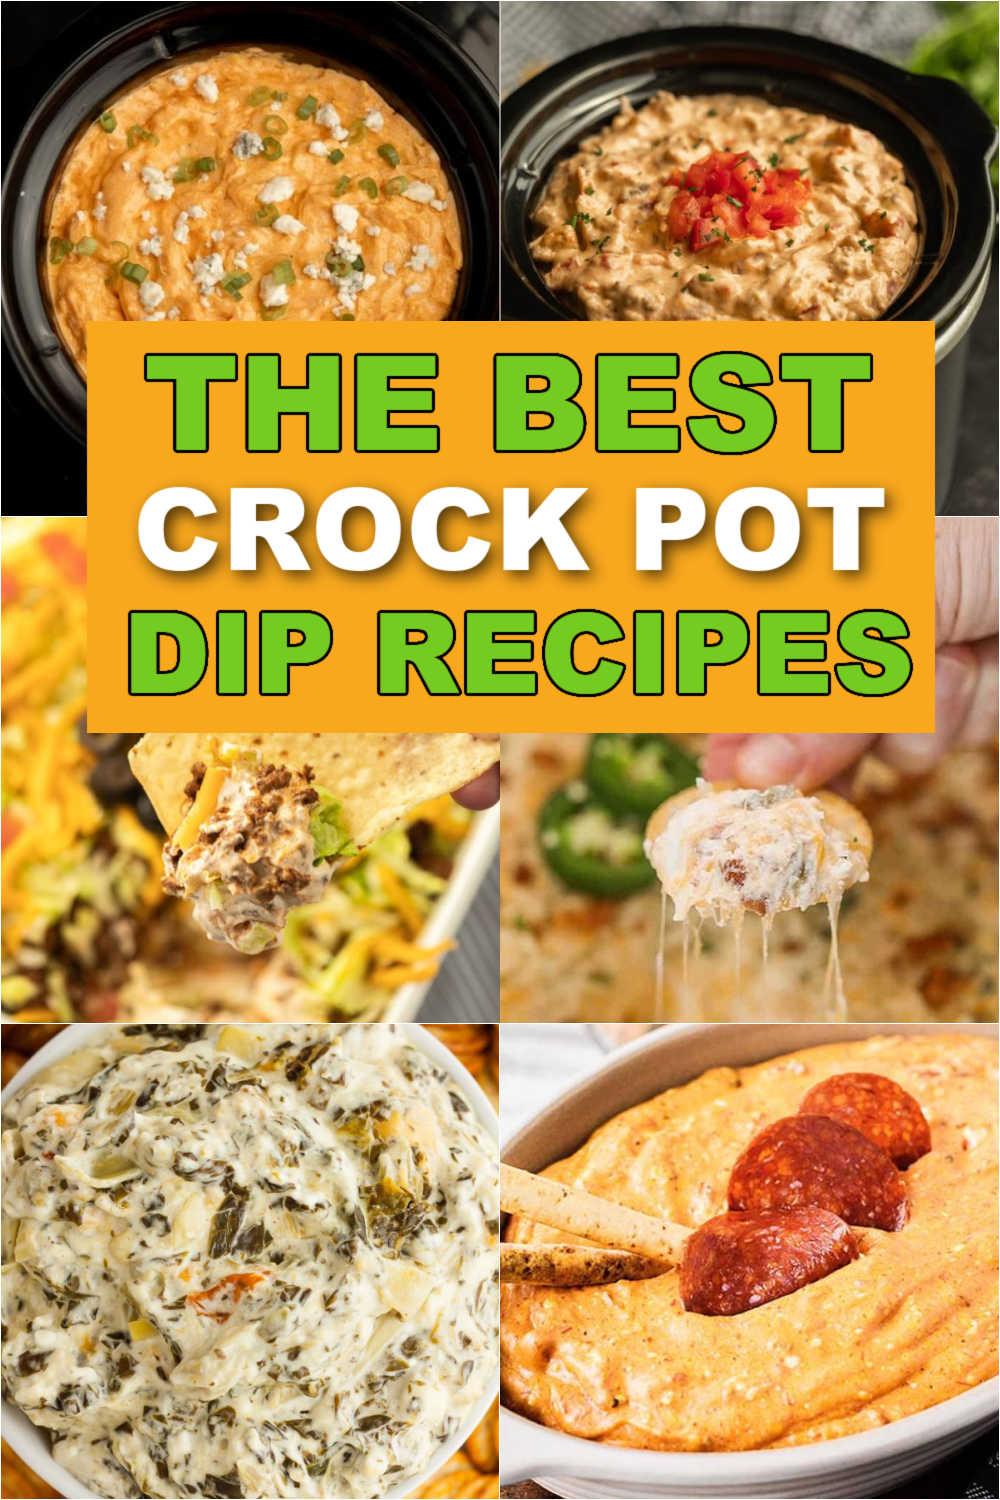 https://www.eatingonadime.com/wp-content/uploads/2022/05/Crock-Pot-Dip-Recipes-Pin-1-1.jpg